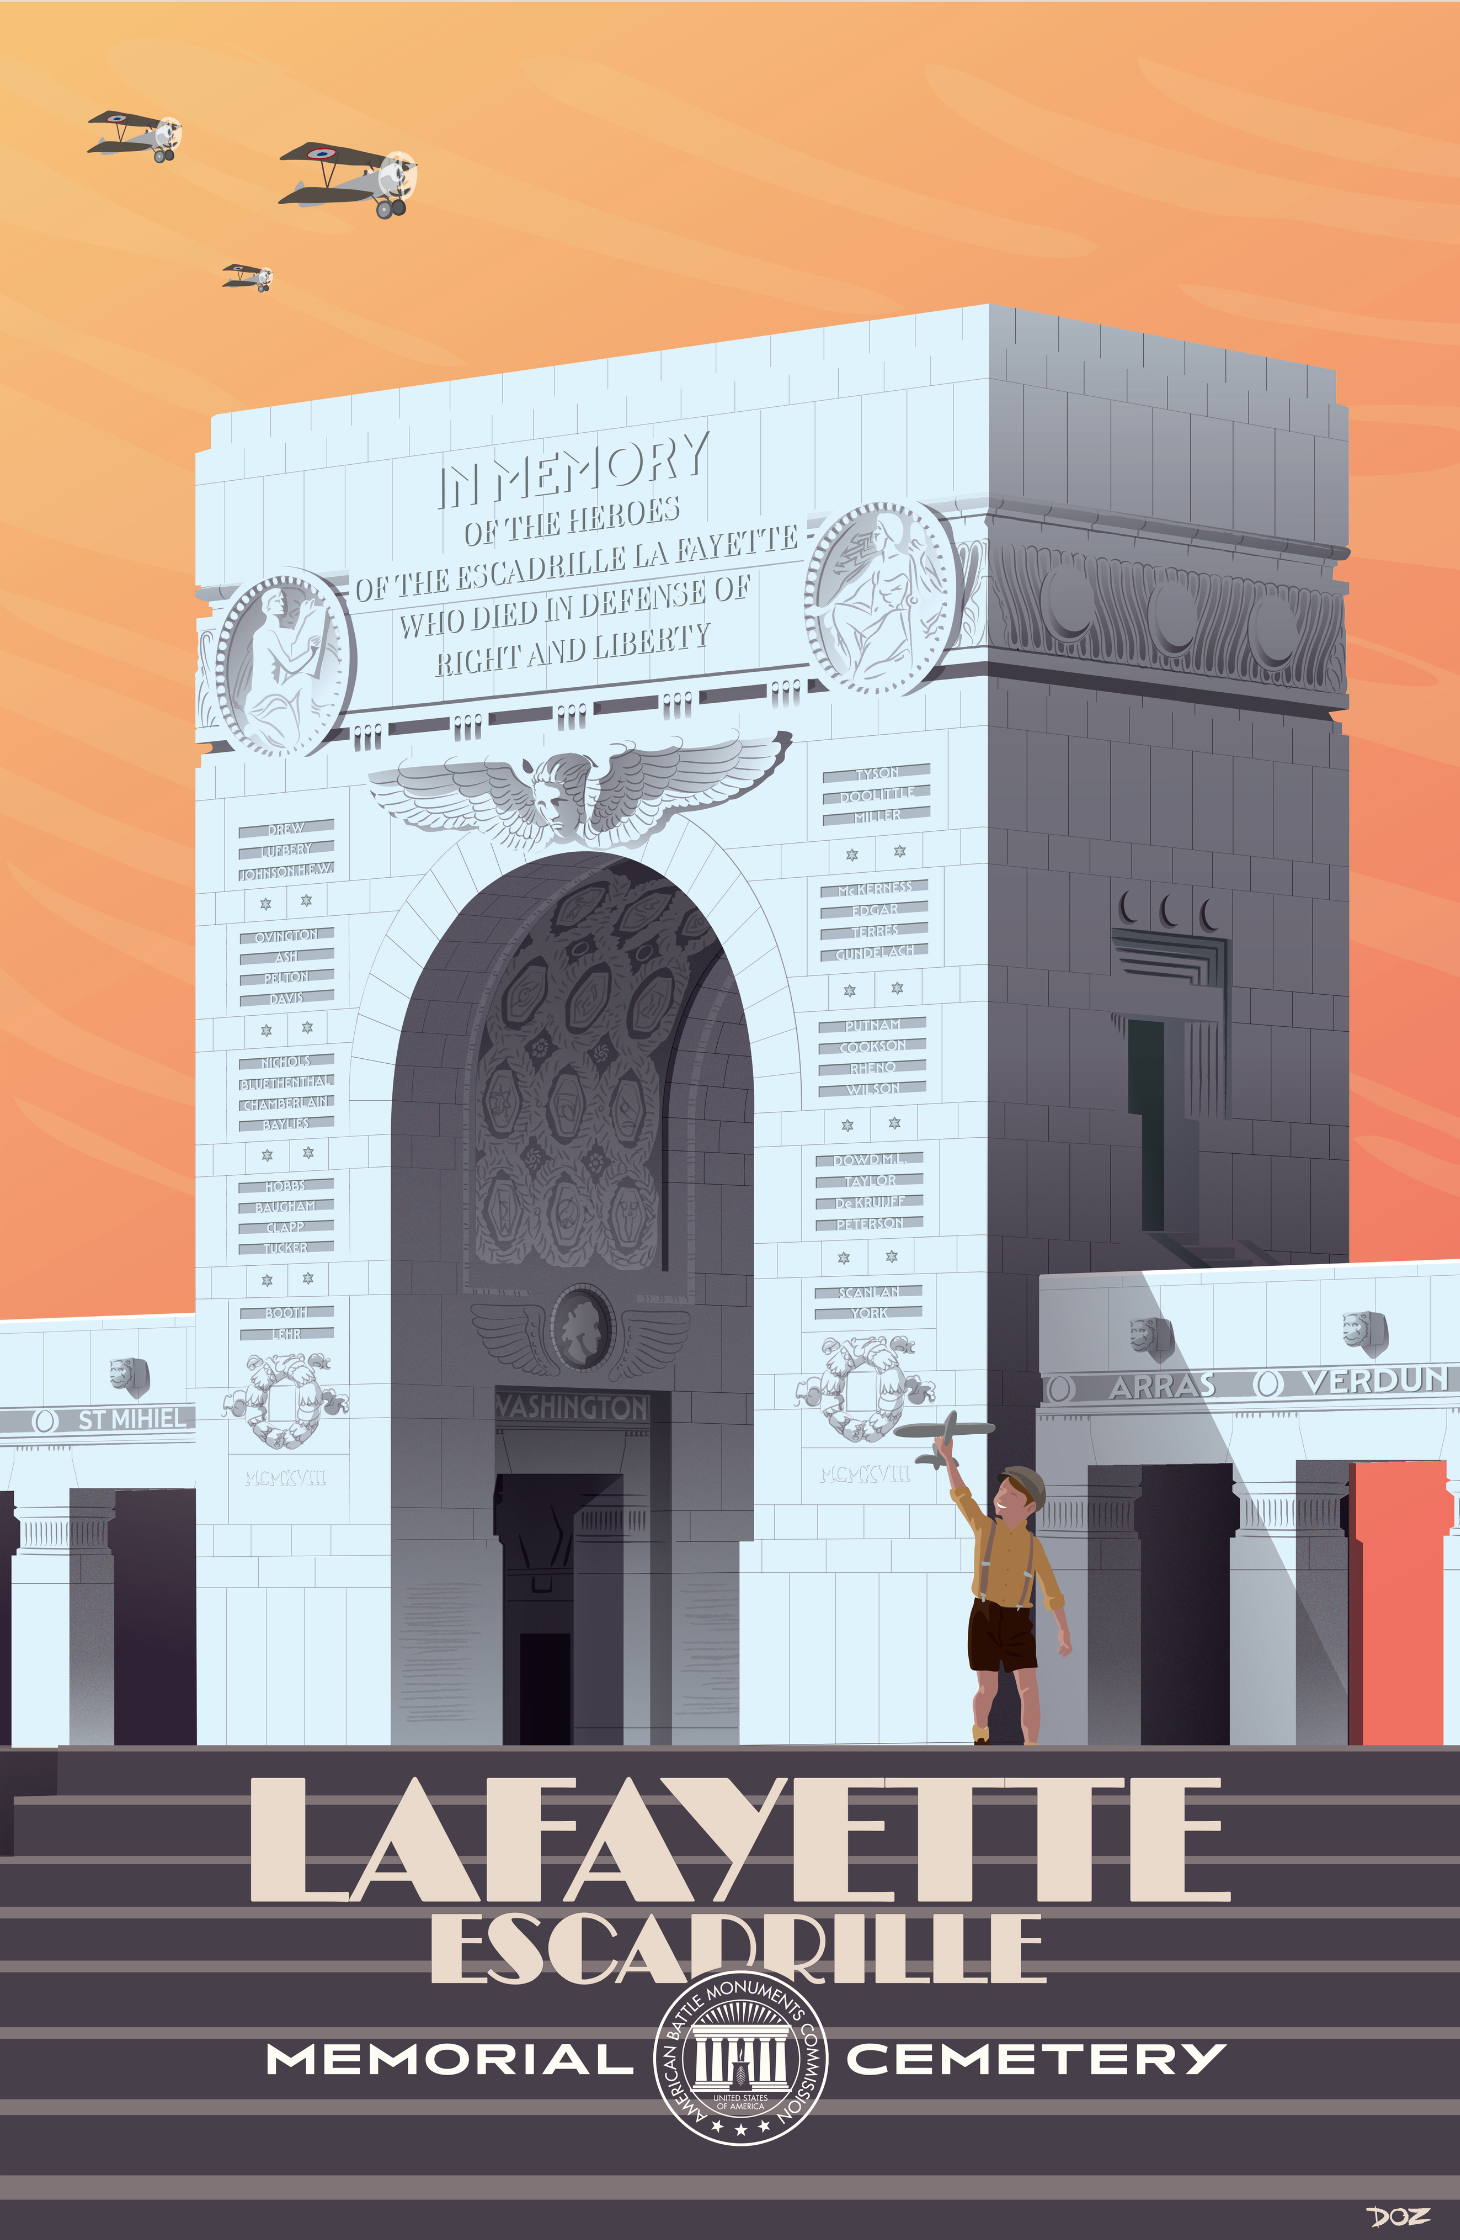 Vintage poster of Lafayette Escadrille Memorial Cemetery created to mark ABMC Centennial